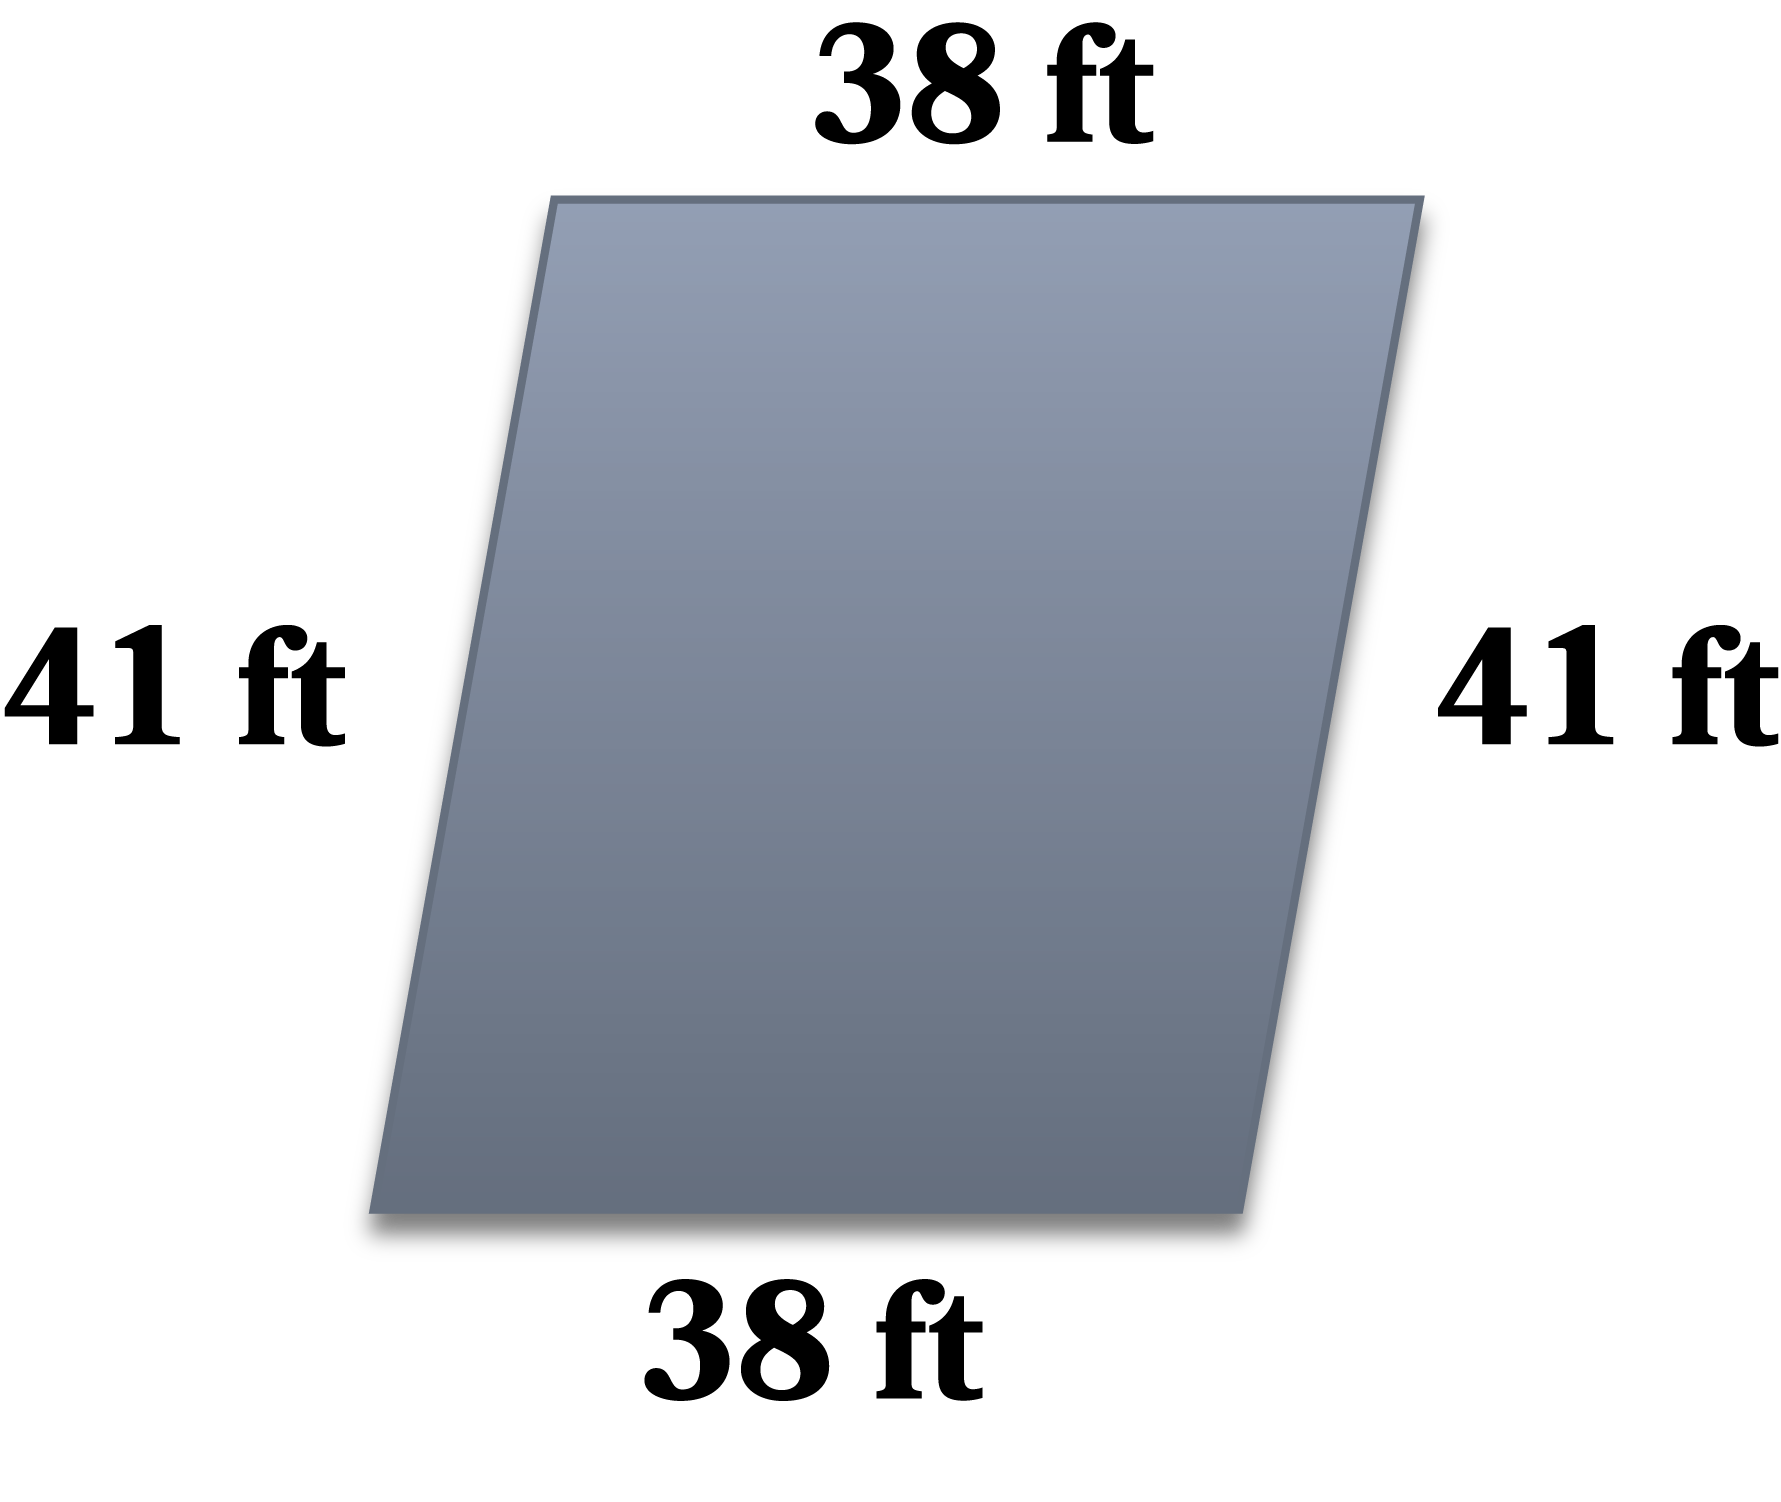 square clipart quadrilateral shape